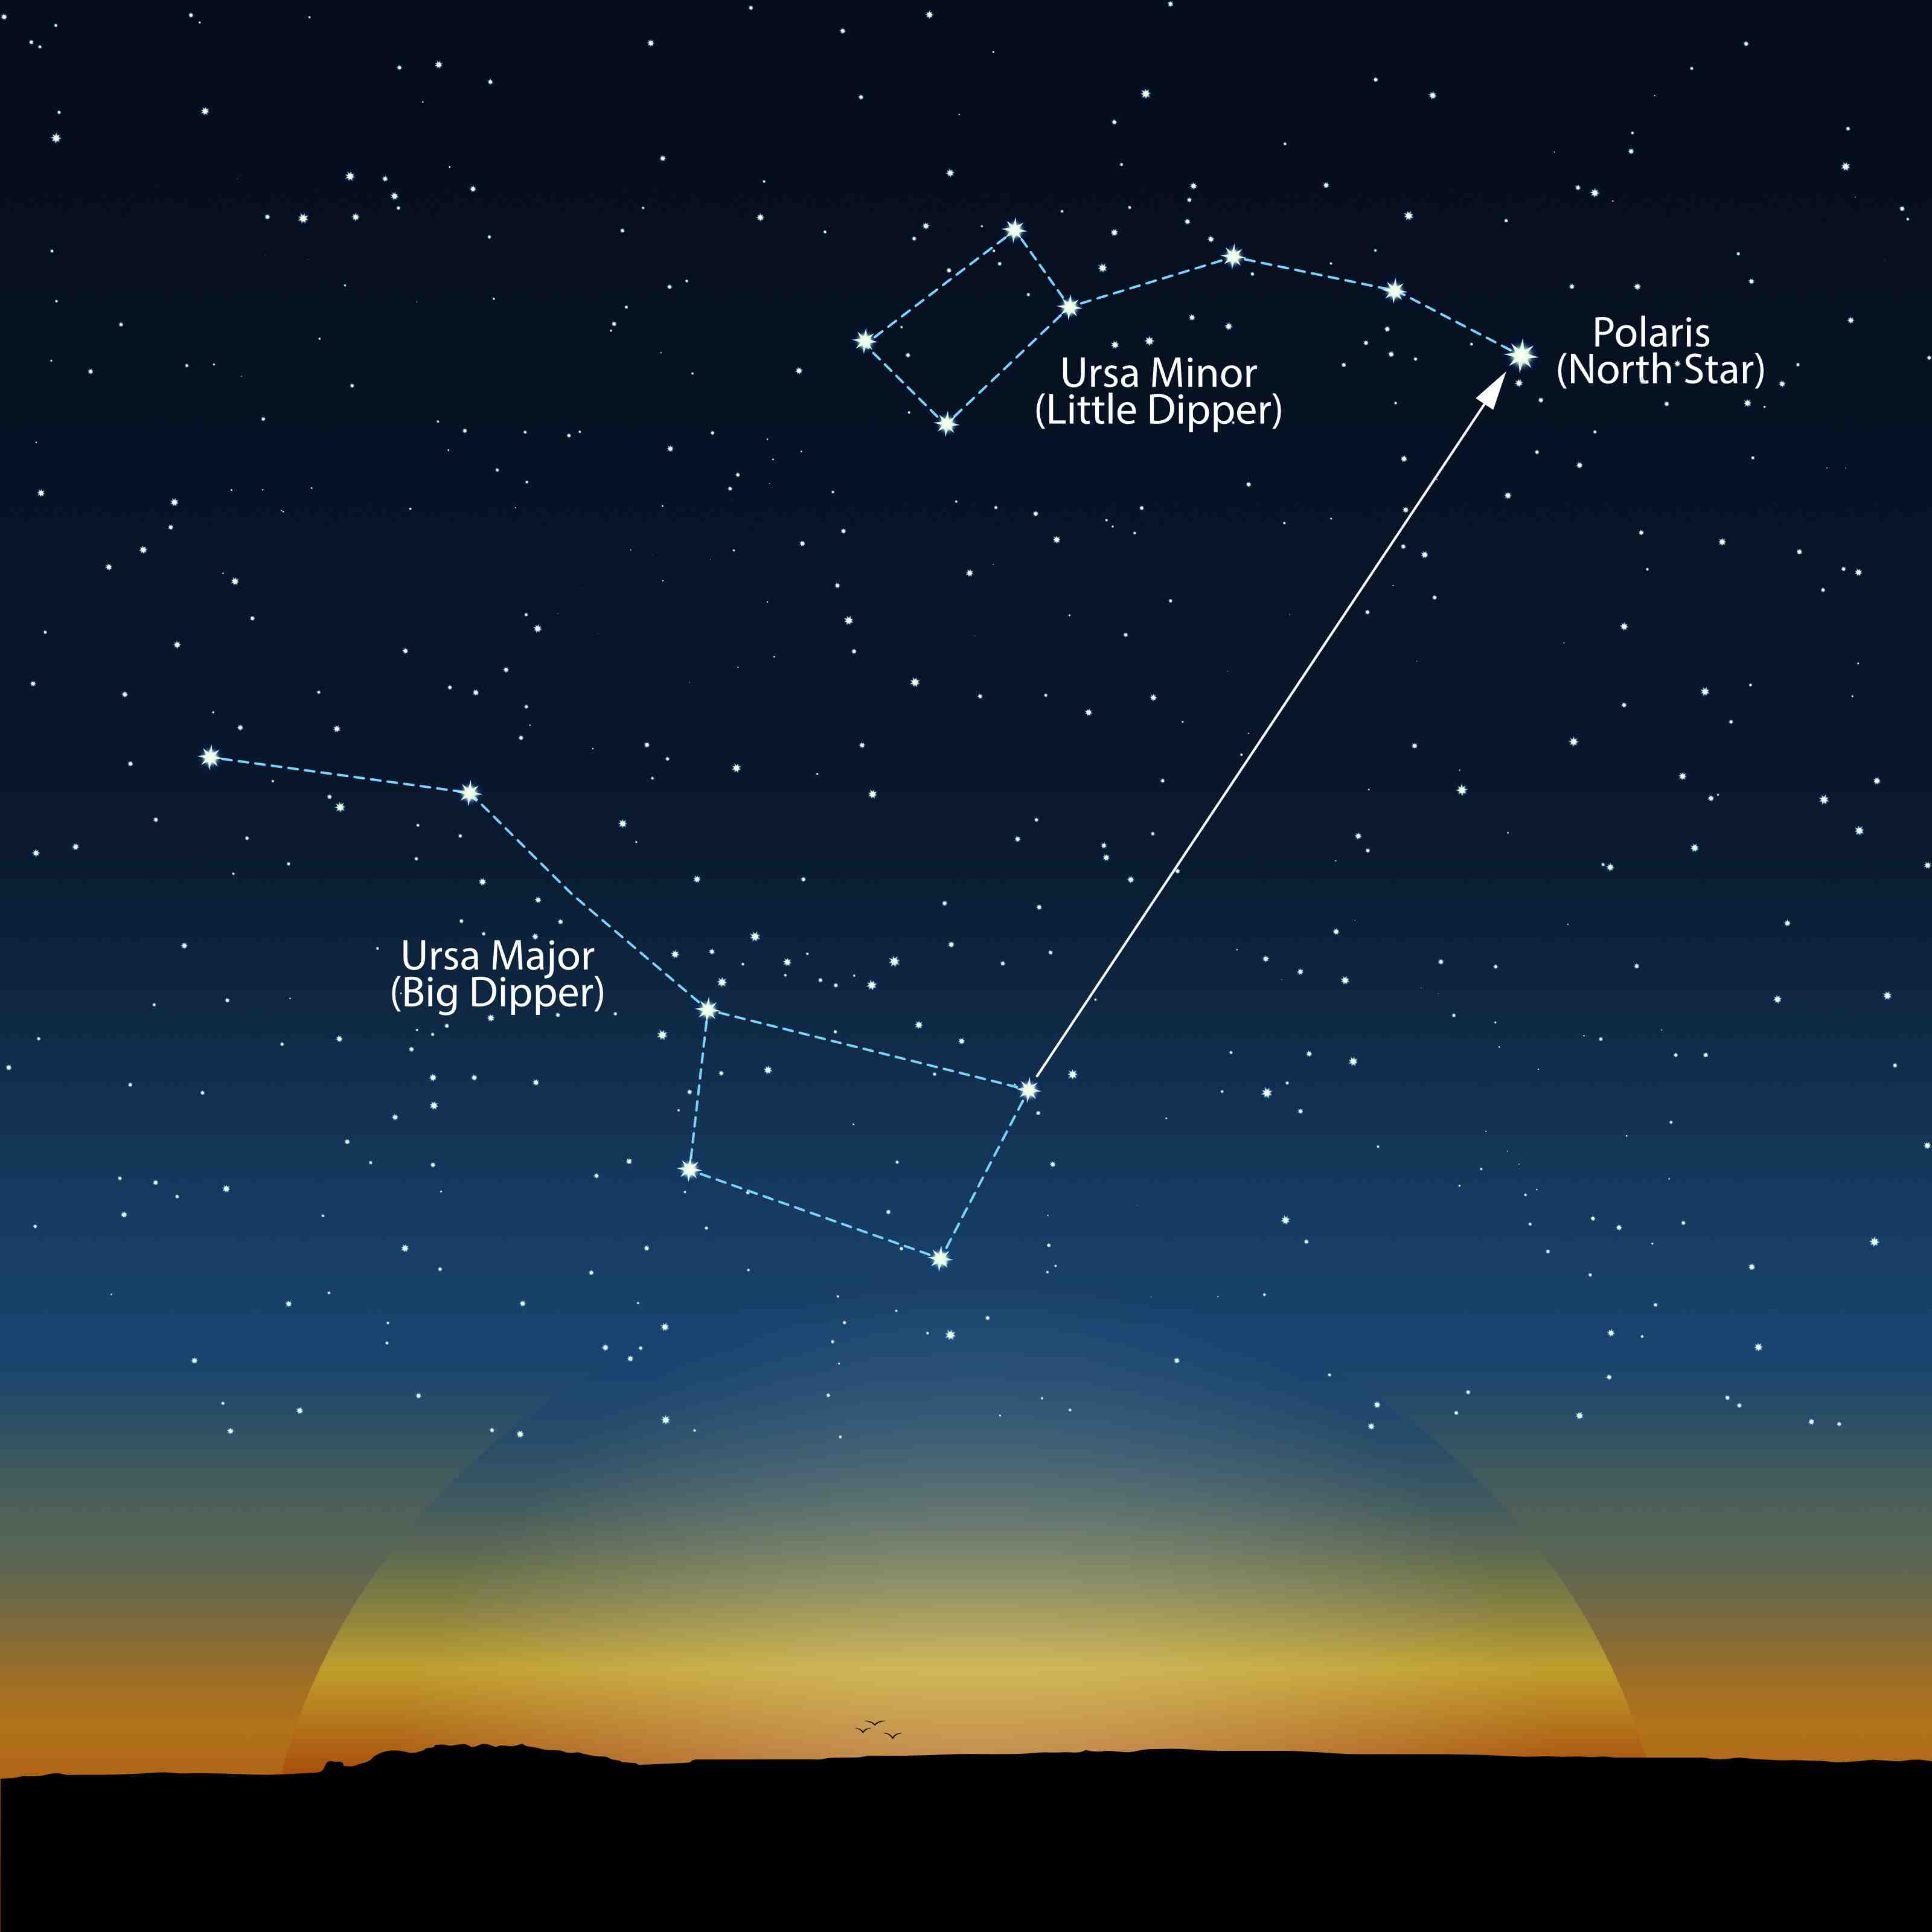 North Star diagram. Photo credit: Vector_FX / Adobe Stock